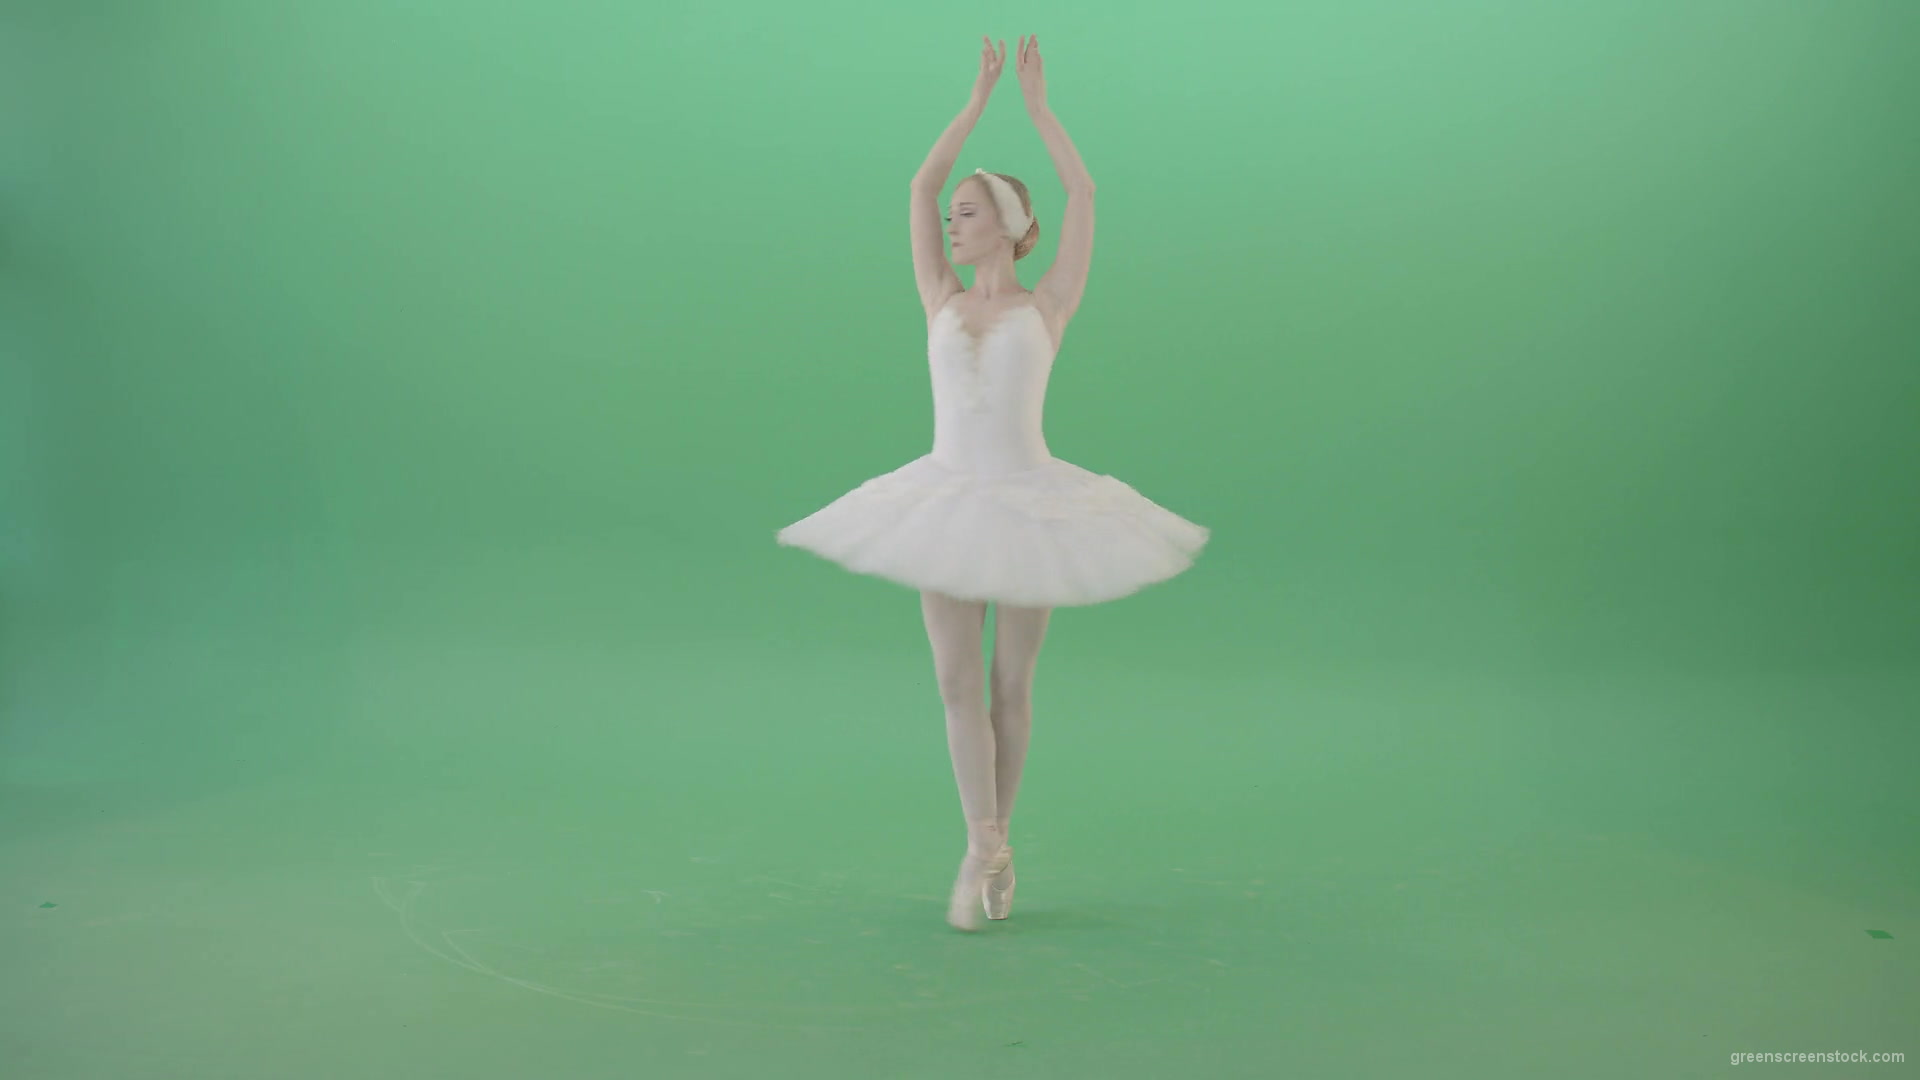 Grace-Ballerina-dance-classical-ballet-art-in-white-costume-on-green-screen-4K-Video-Footage-1920_006 Green Screen Stock